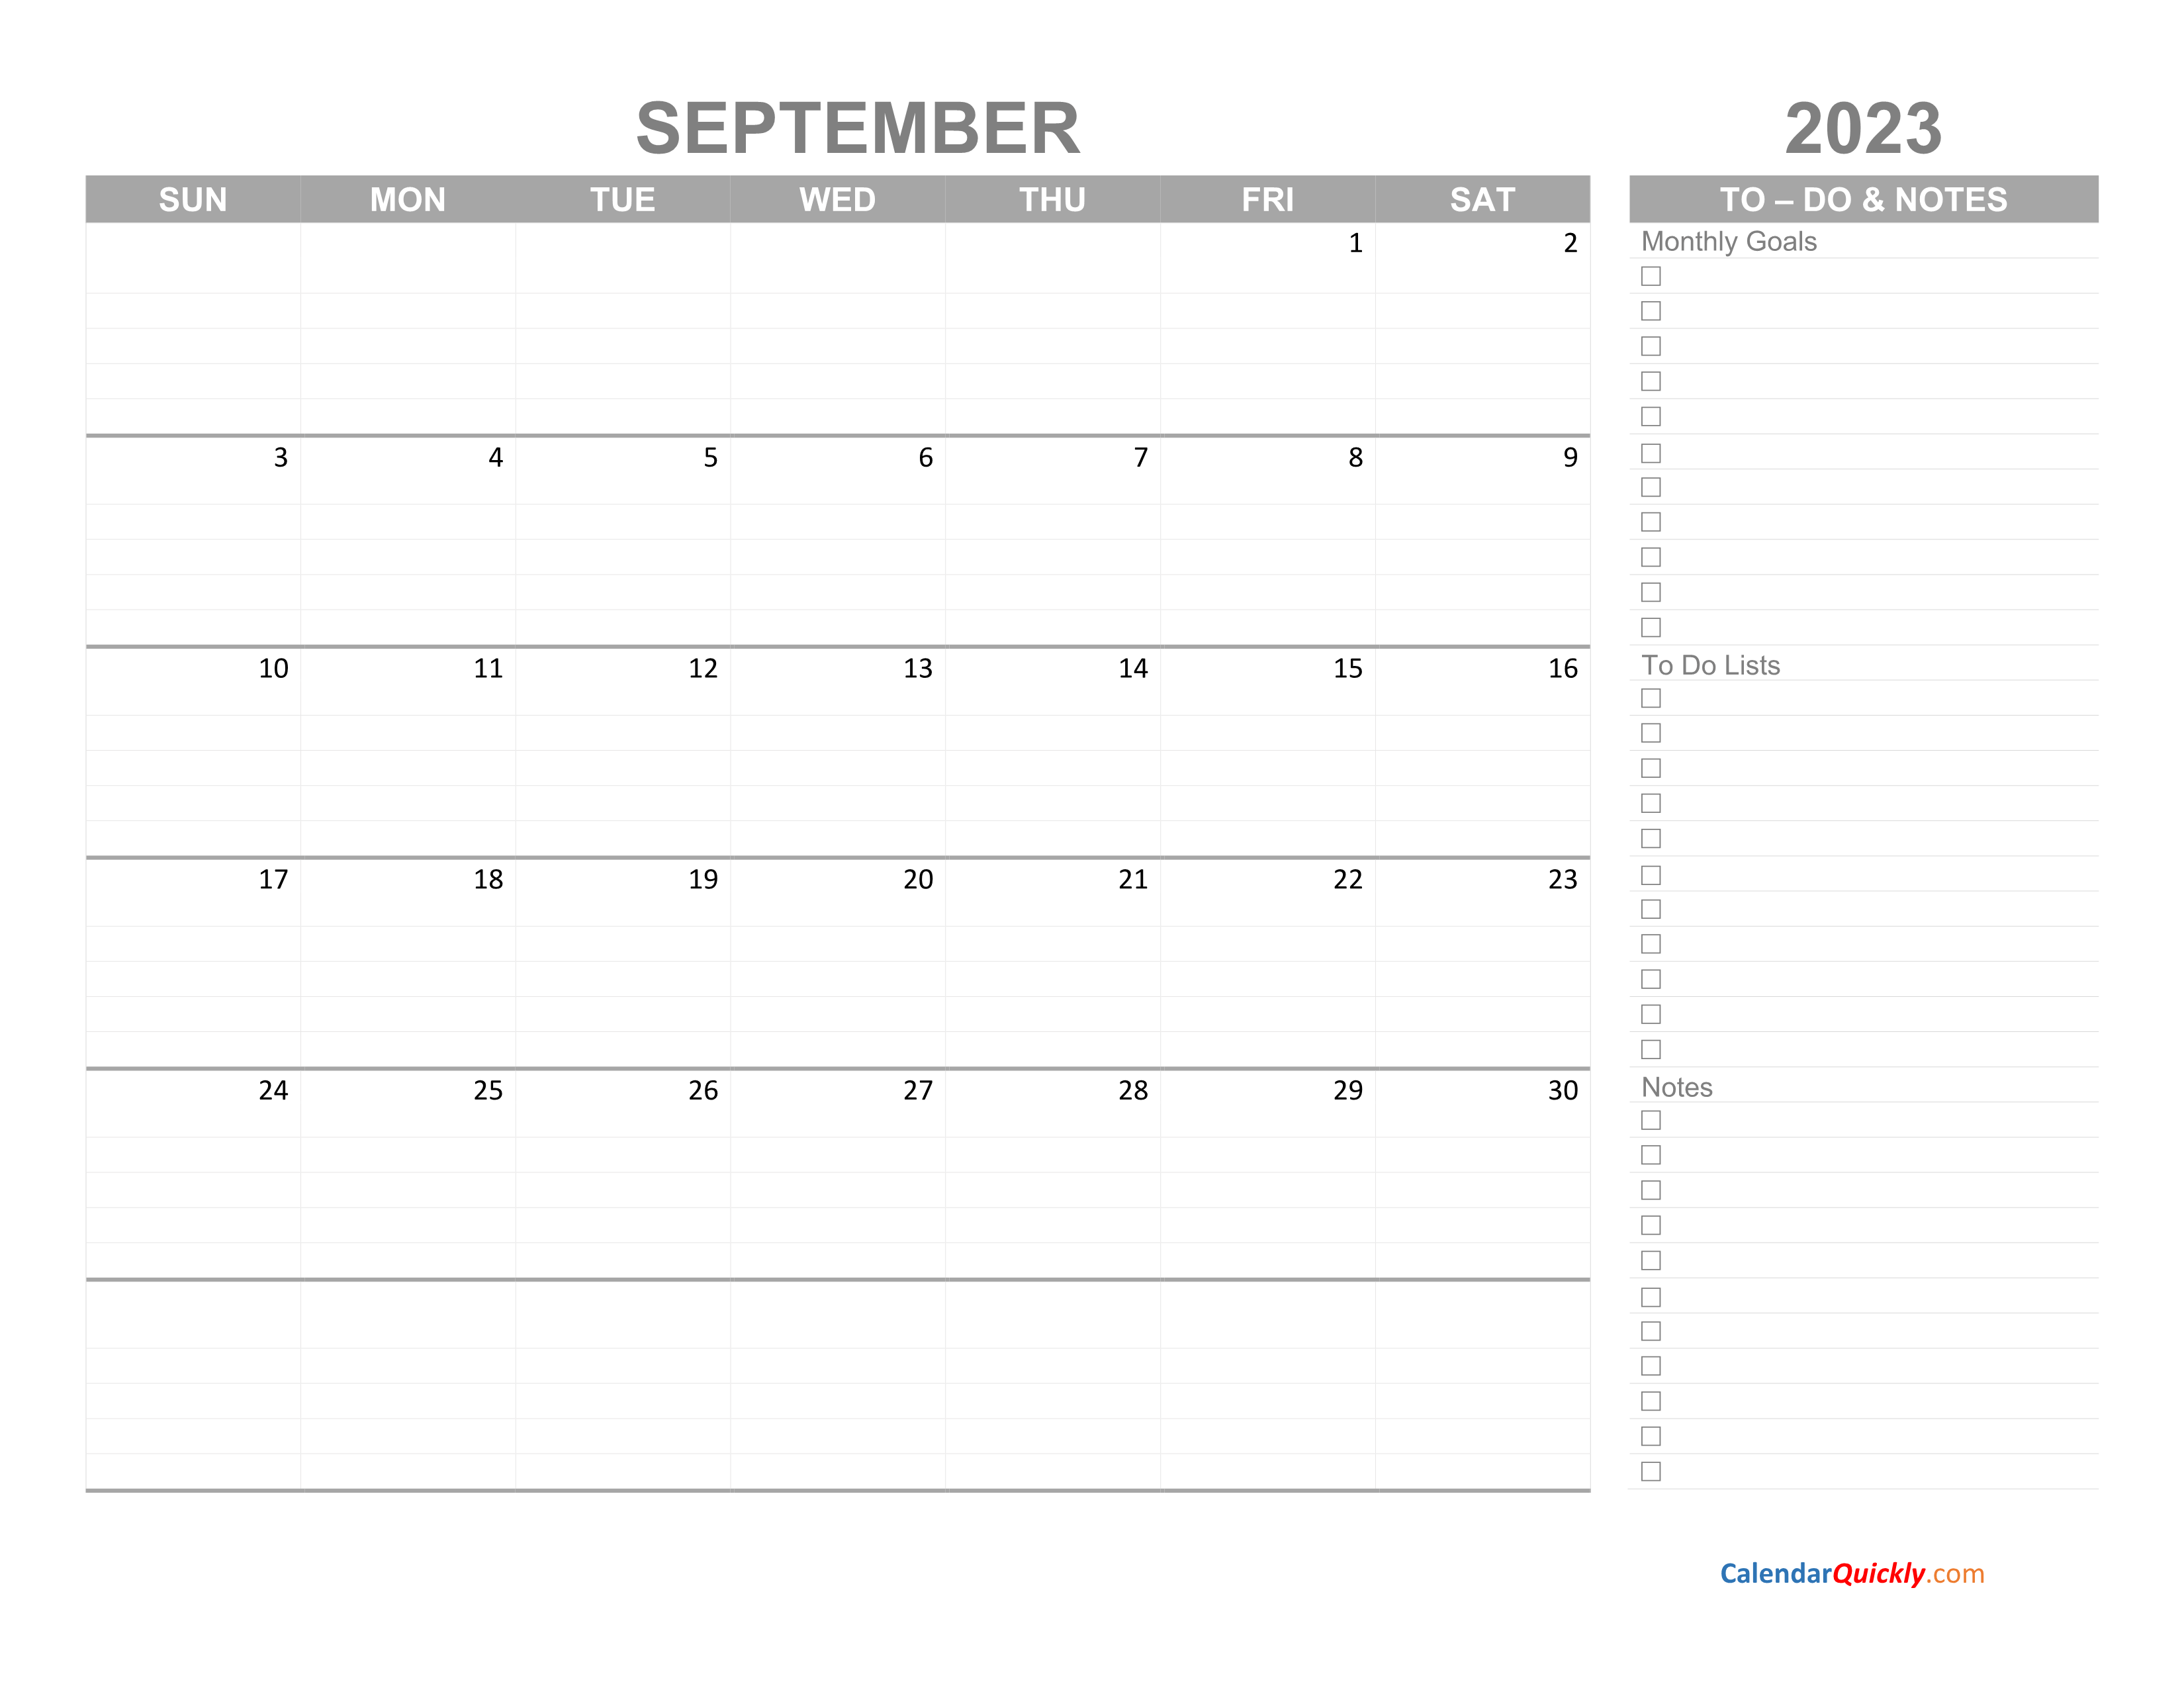 September 2023 Calendar with ToDo List Calendar Quickly